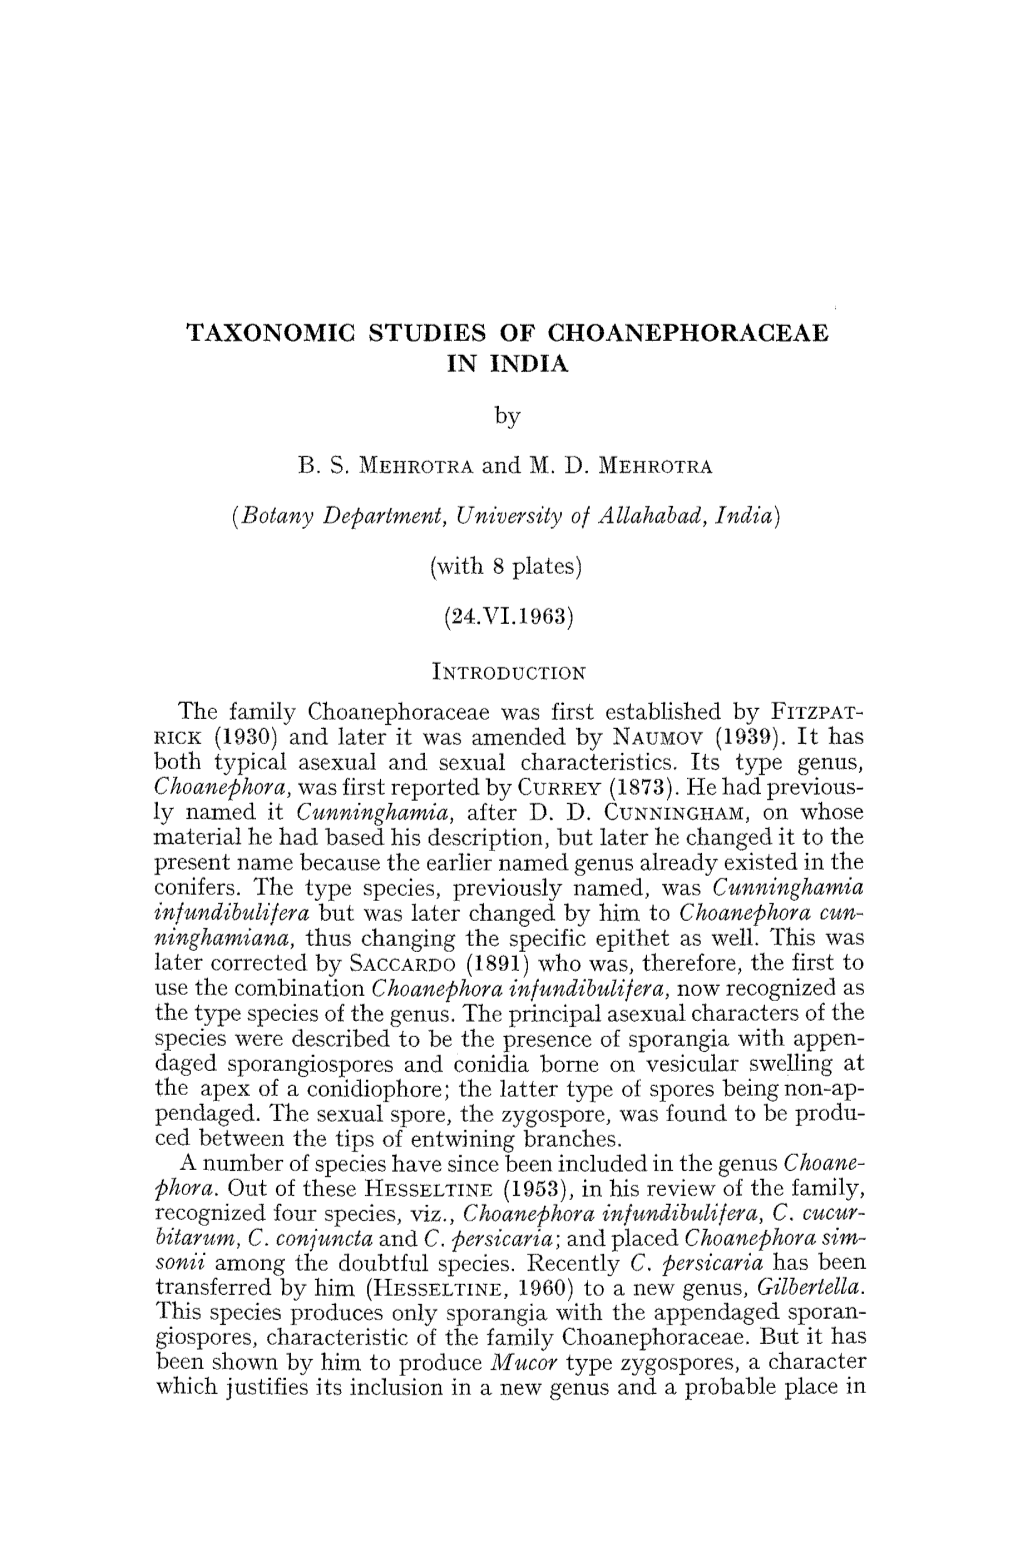 Taxonomic Studies of Choanephoraceae in India